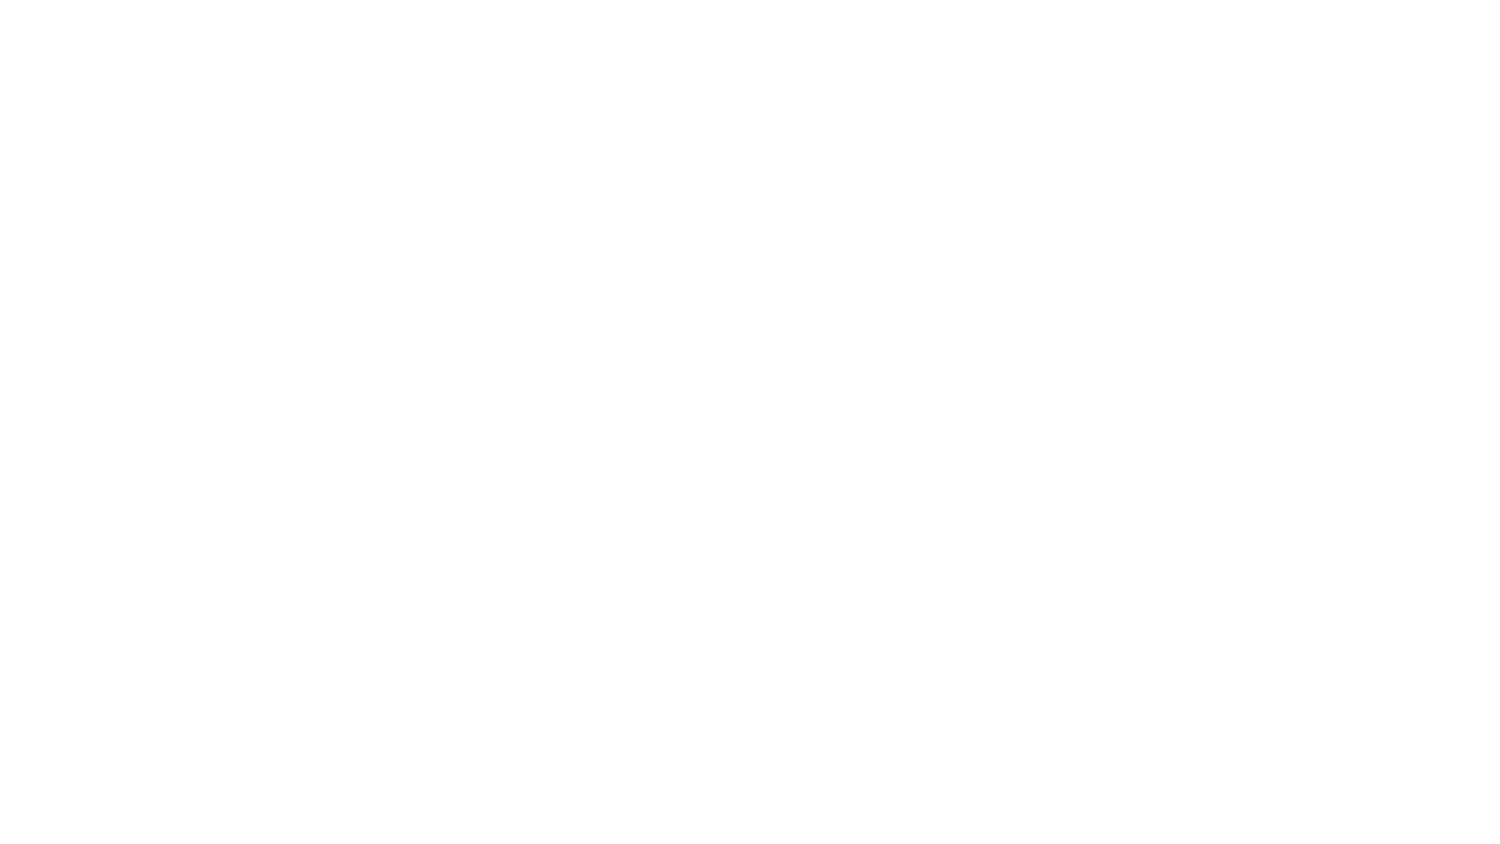 Heretixx